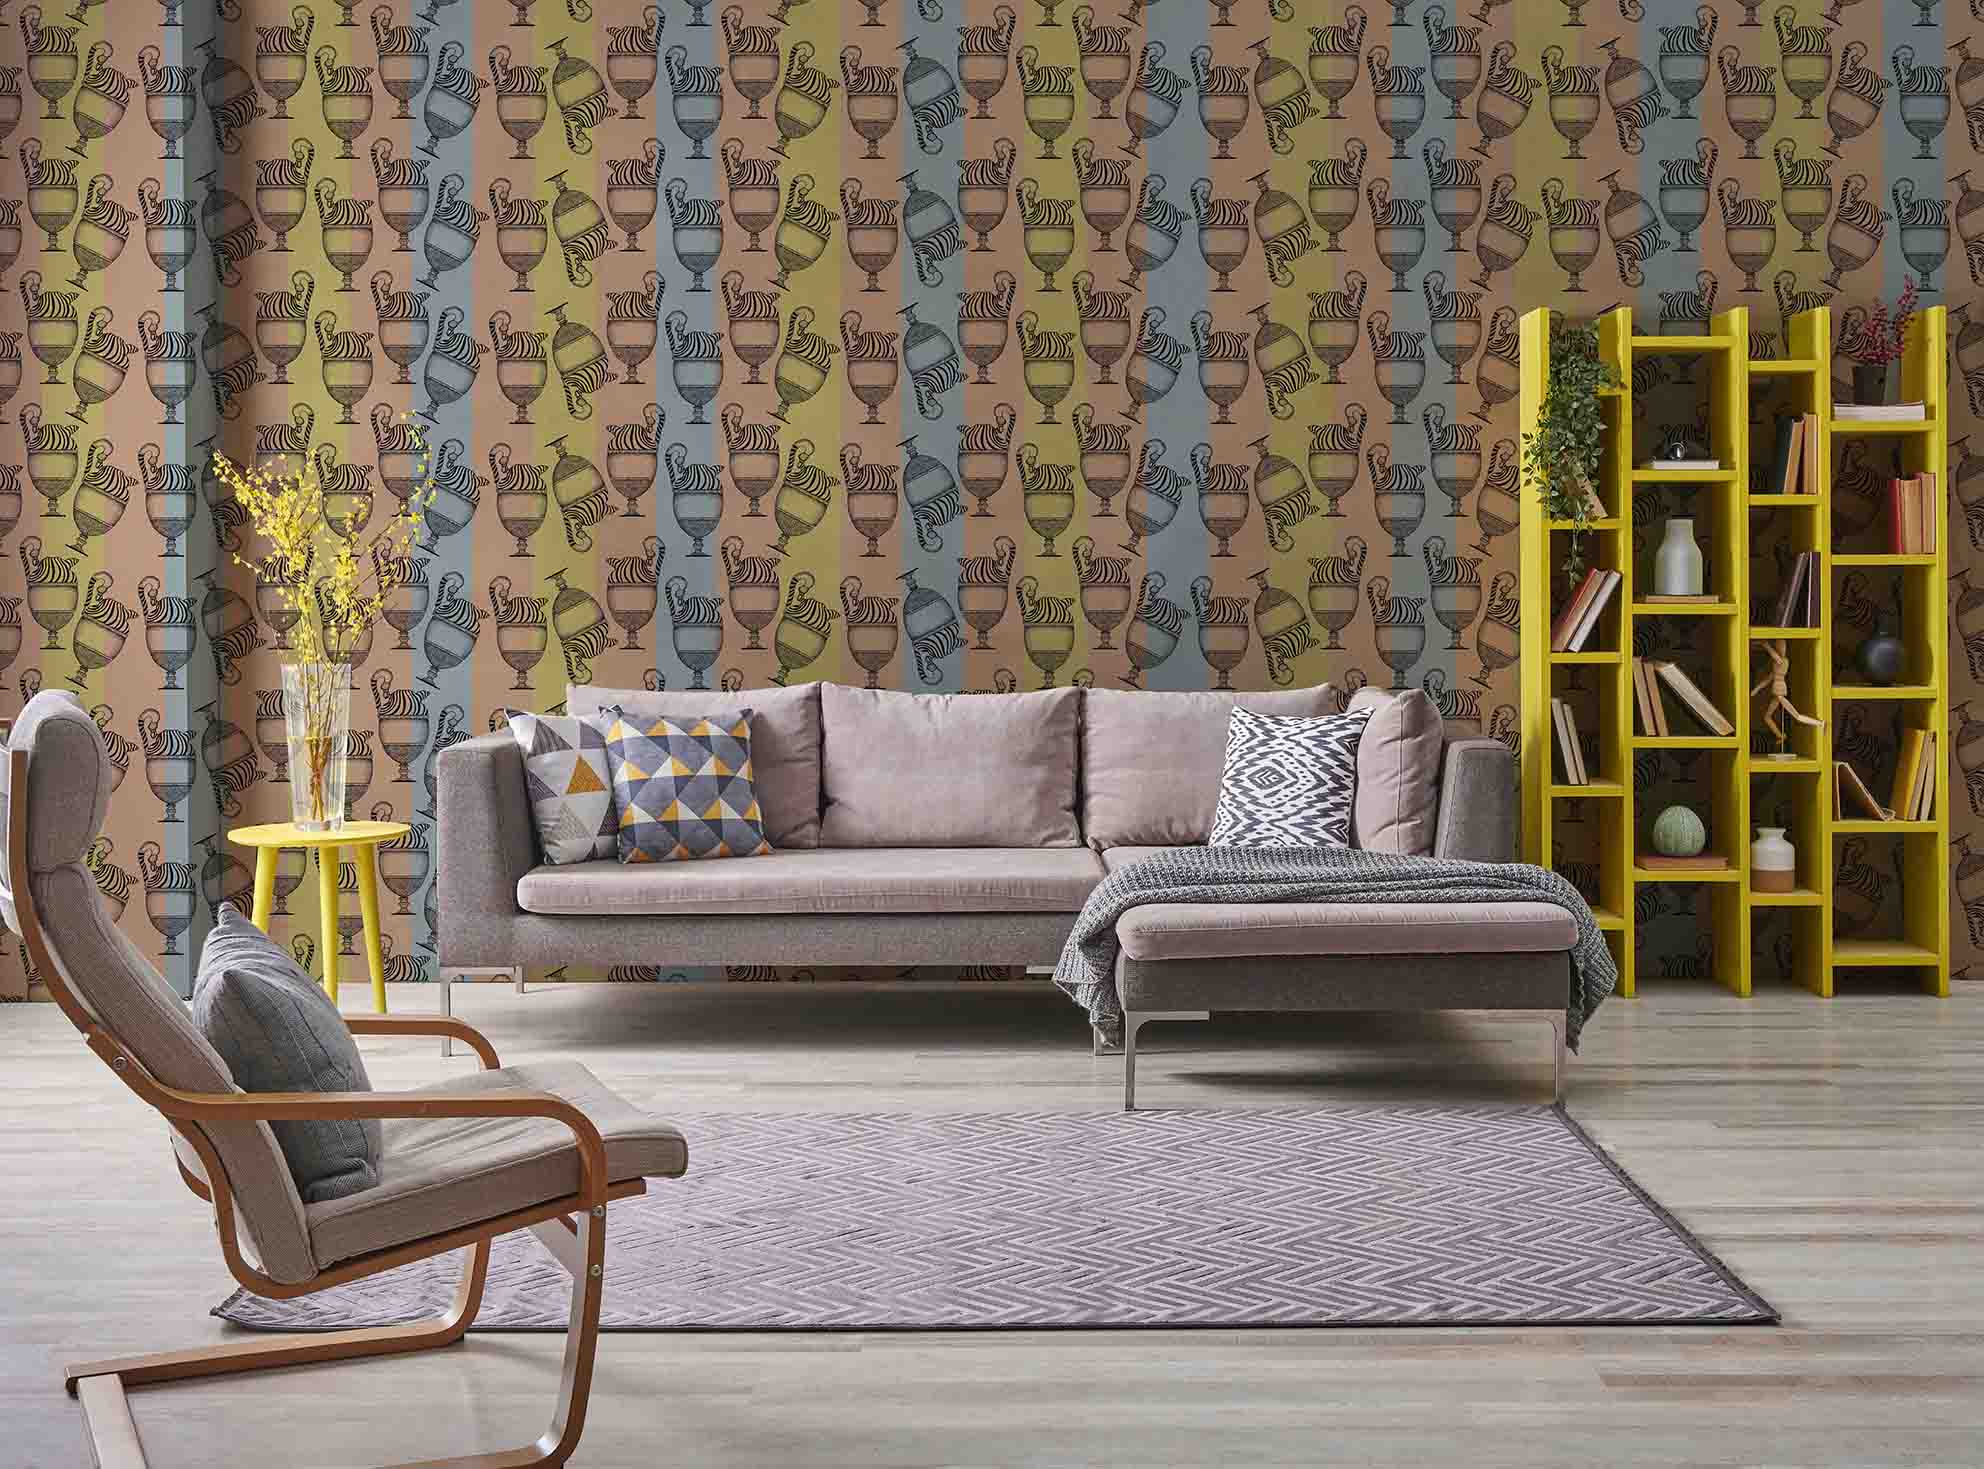 Fontana-Righe-MaVoix-wallpaper-eclectic-line-interior-living-overall